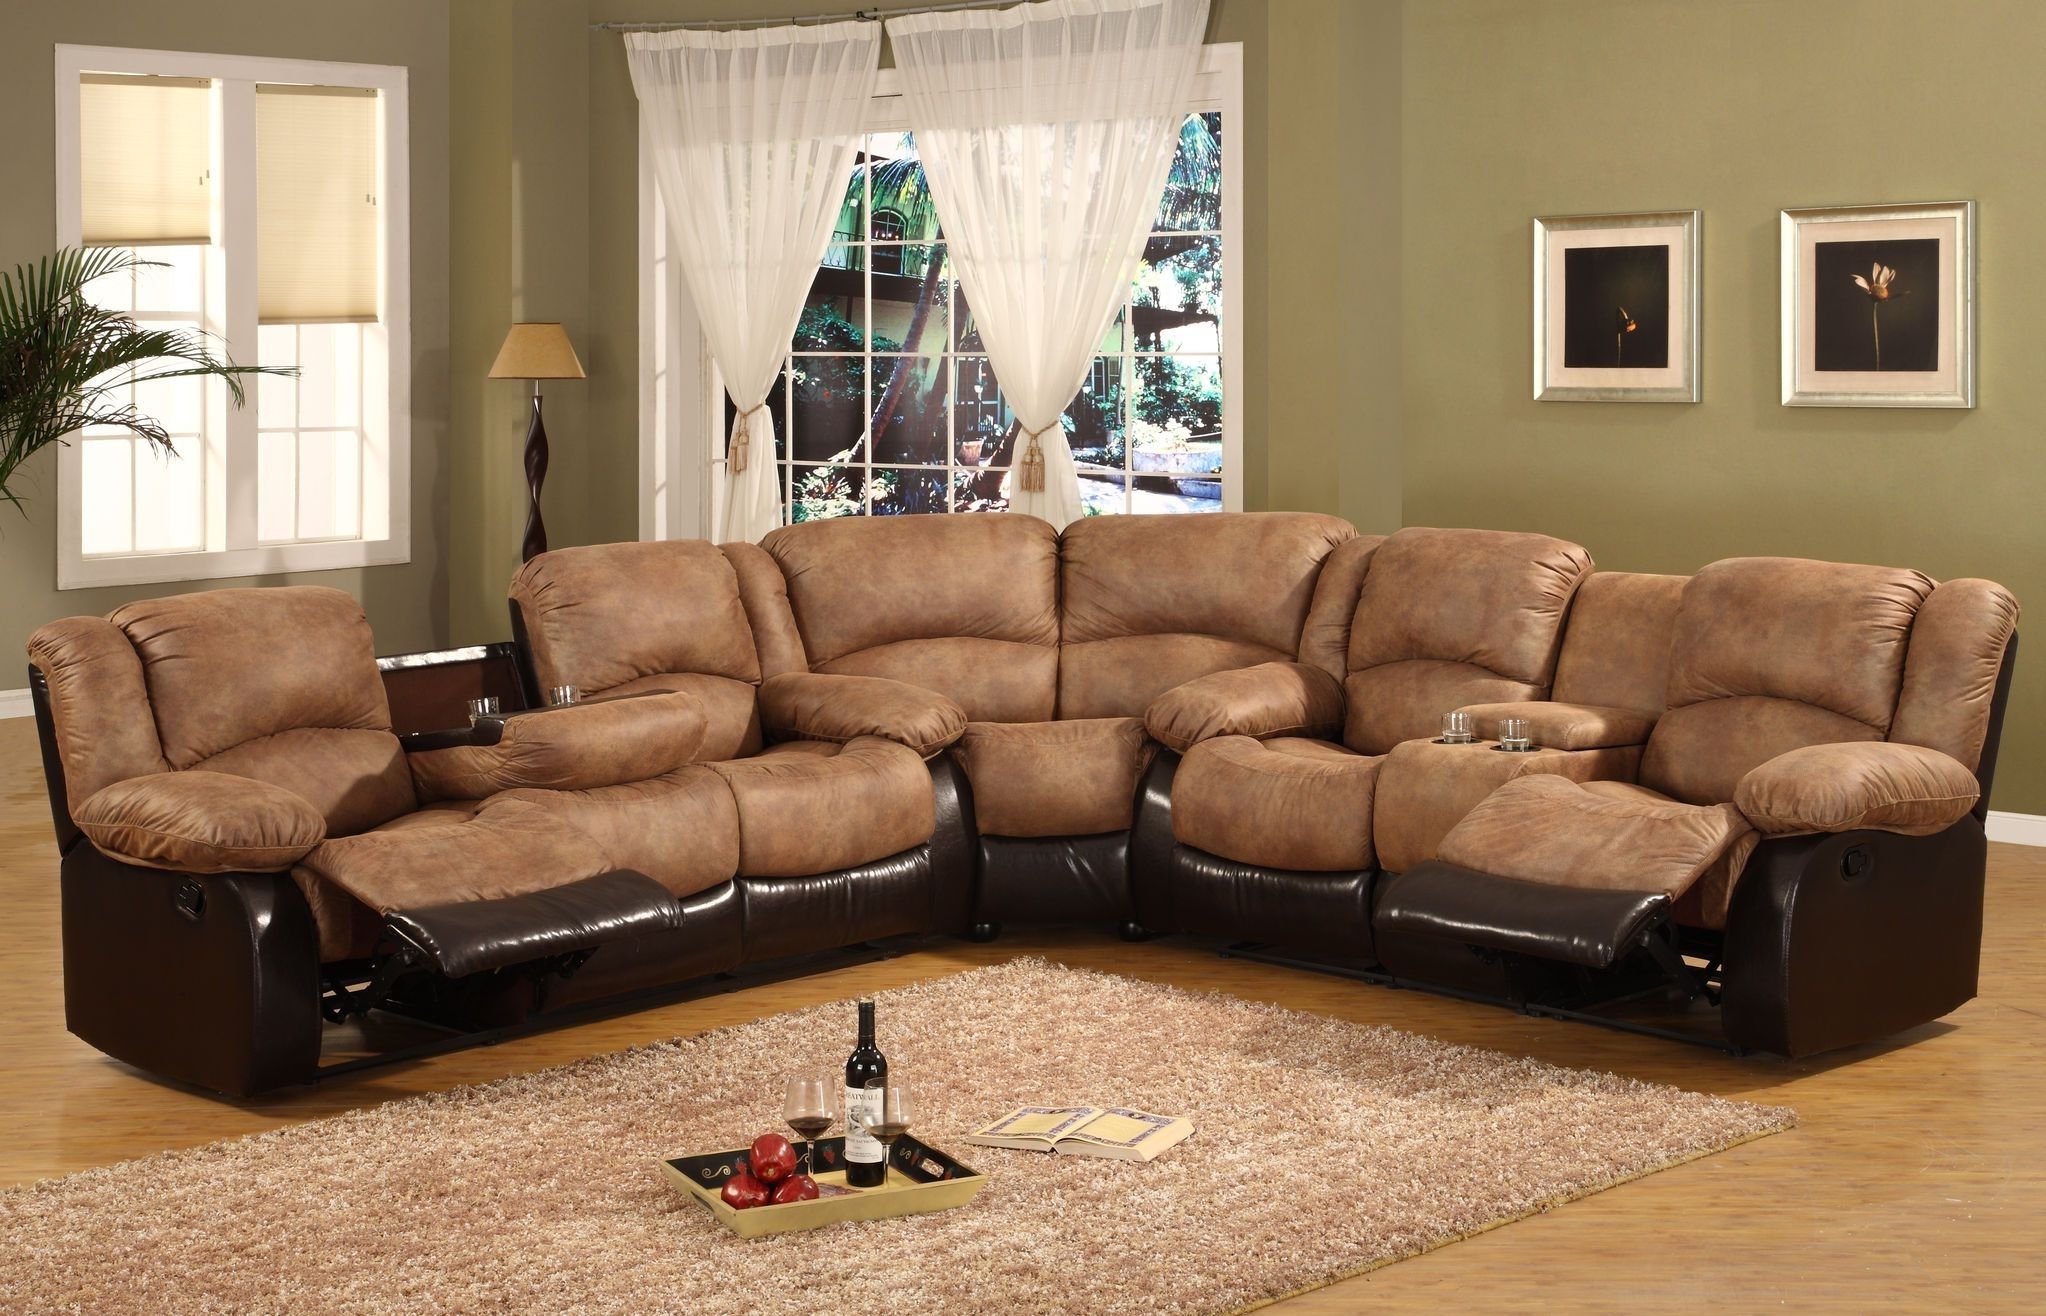 Big Lots Furniture Sofas Sectional Warranty Vanity Licious Biglots Inside Sectional Sofas At Big Lots 